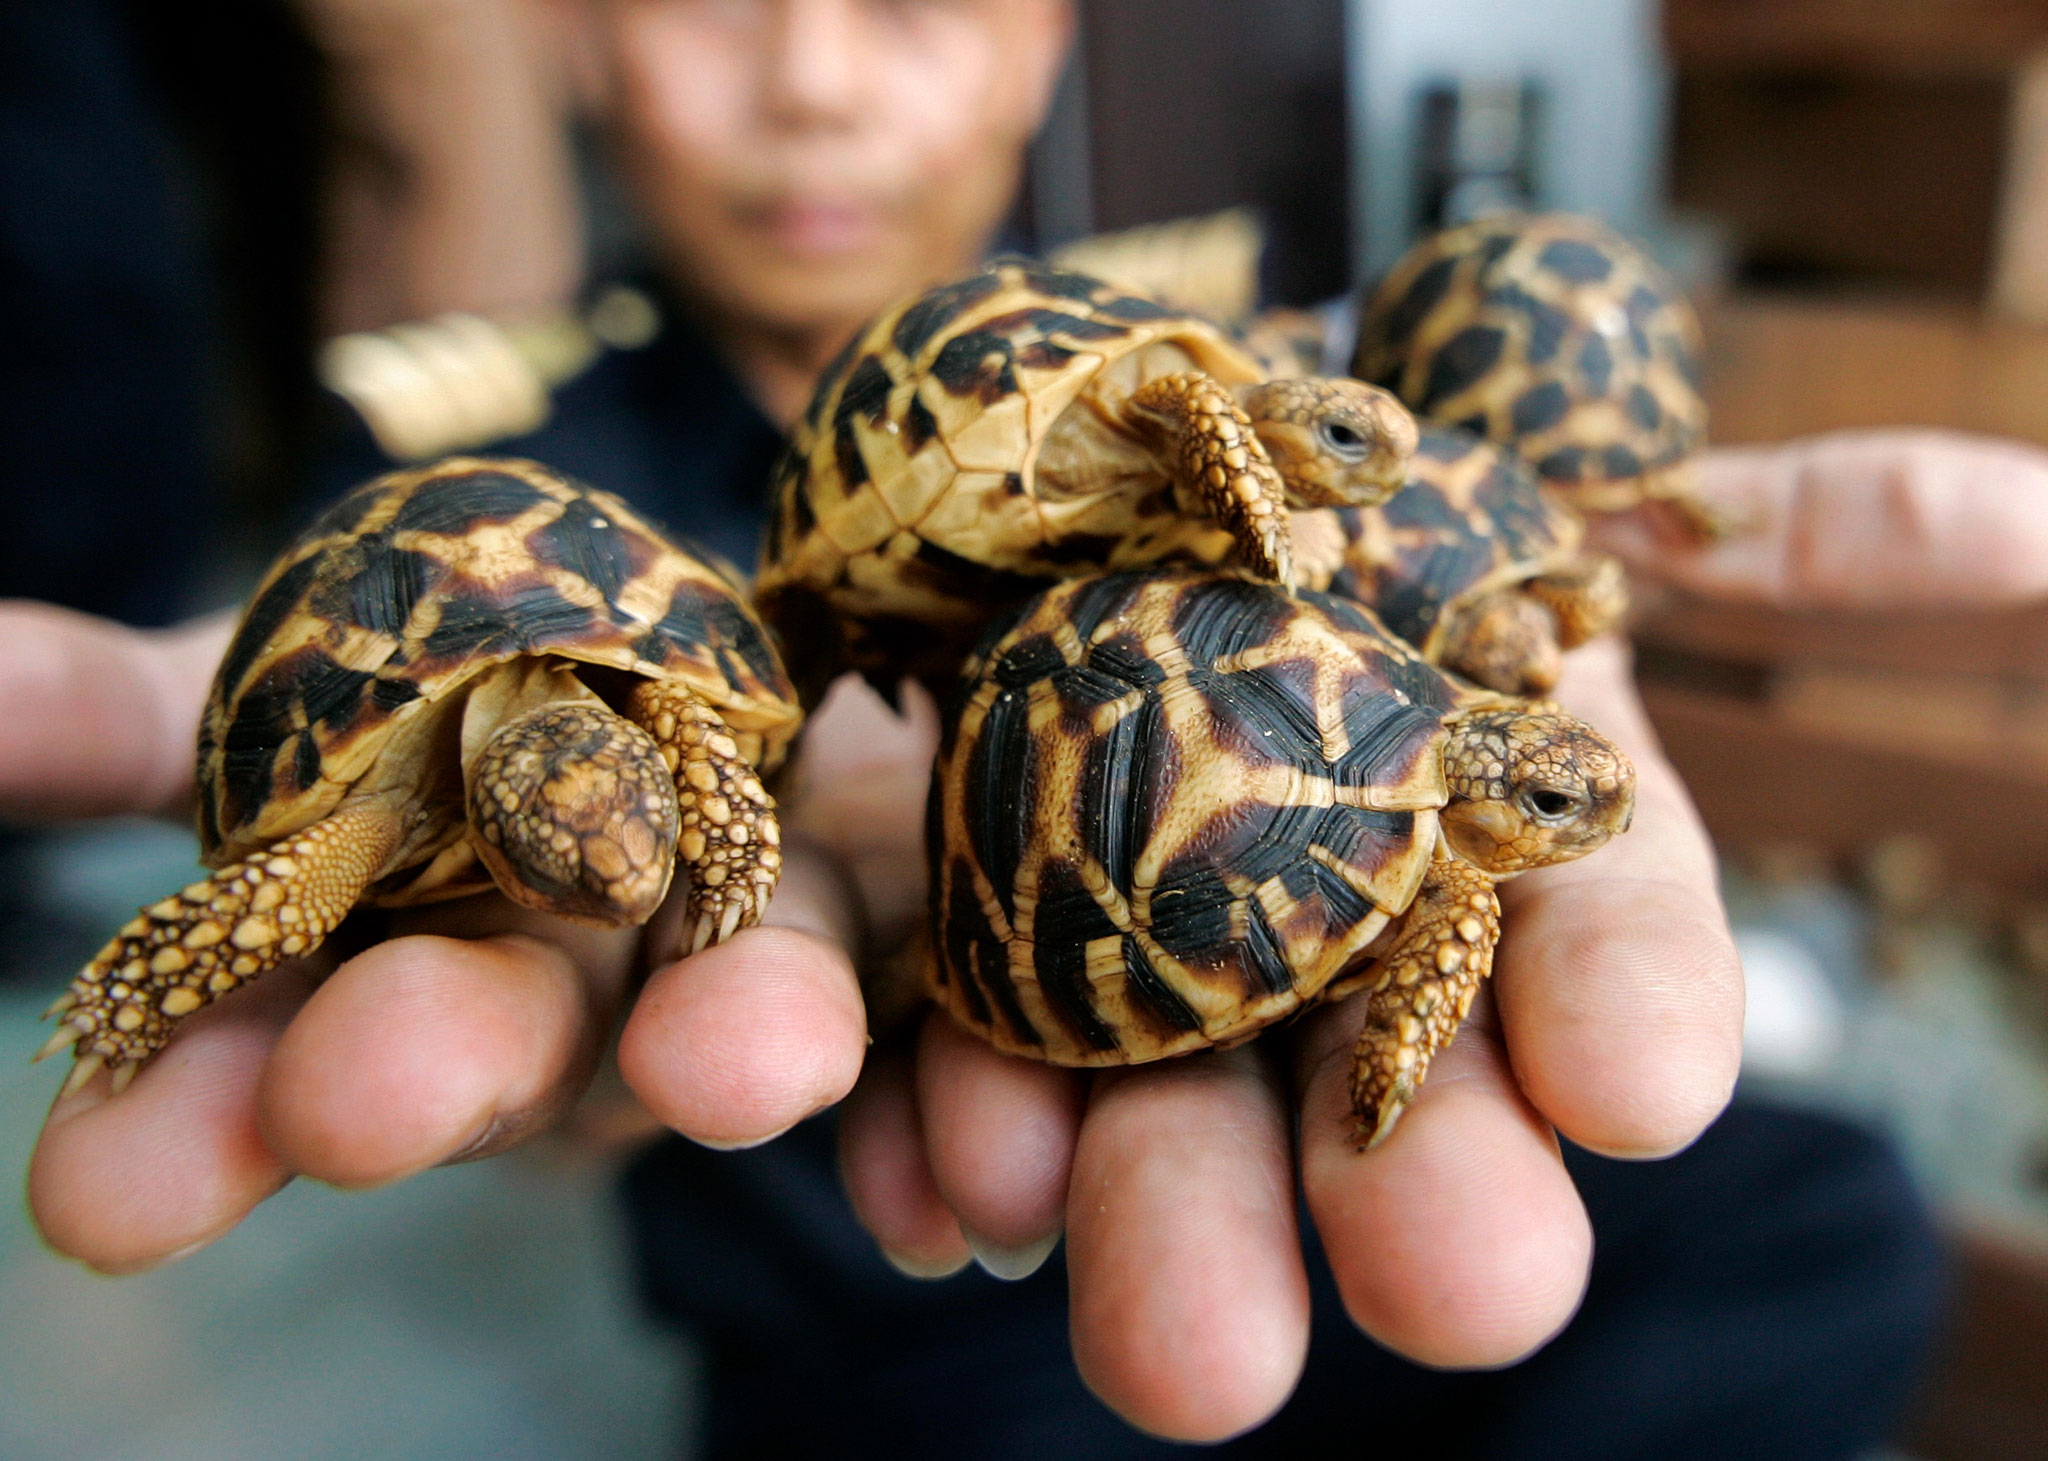 Indian Star Tortoise #7 